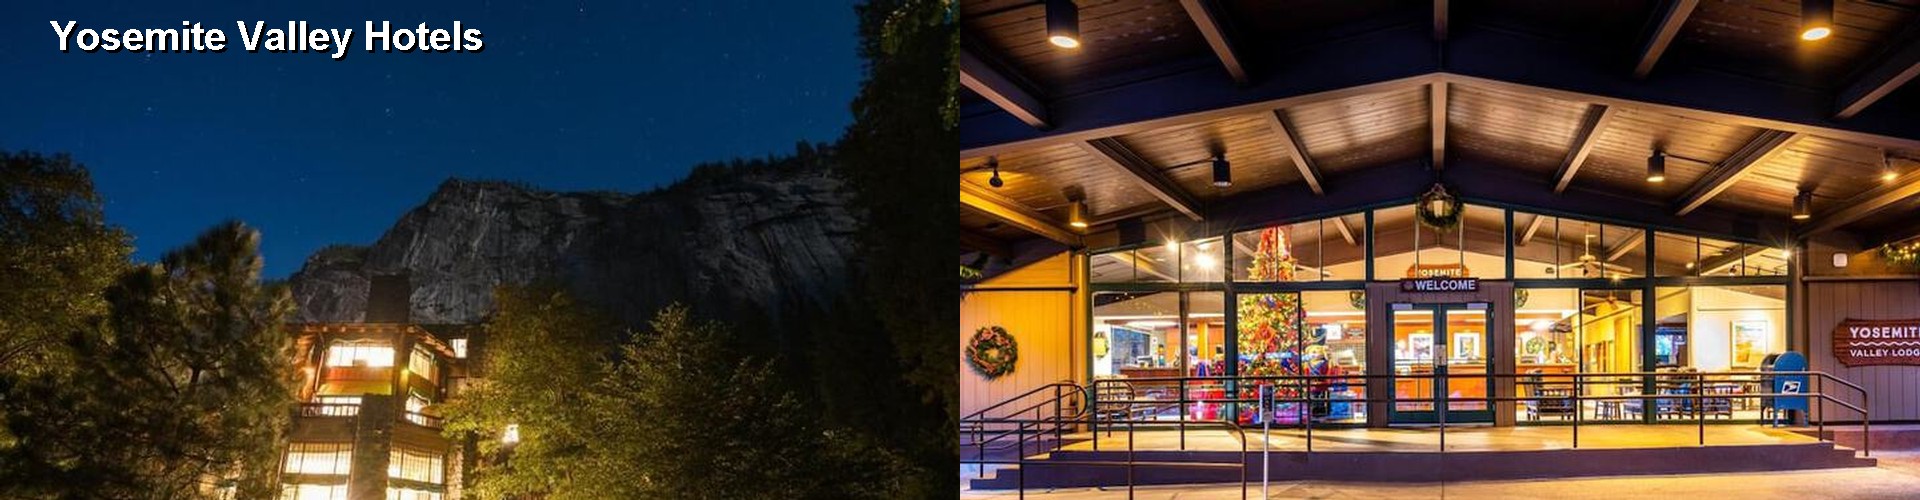 5 Best Hotels near Yosemite Valley